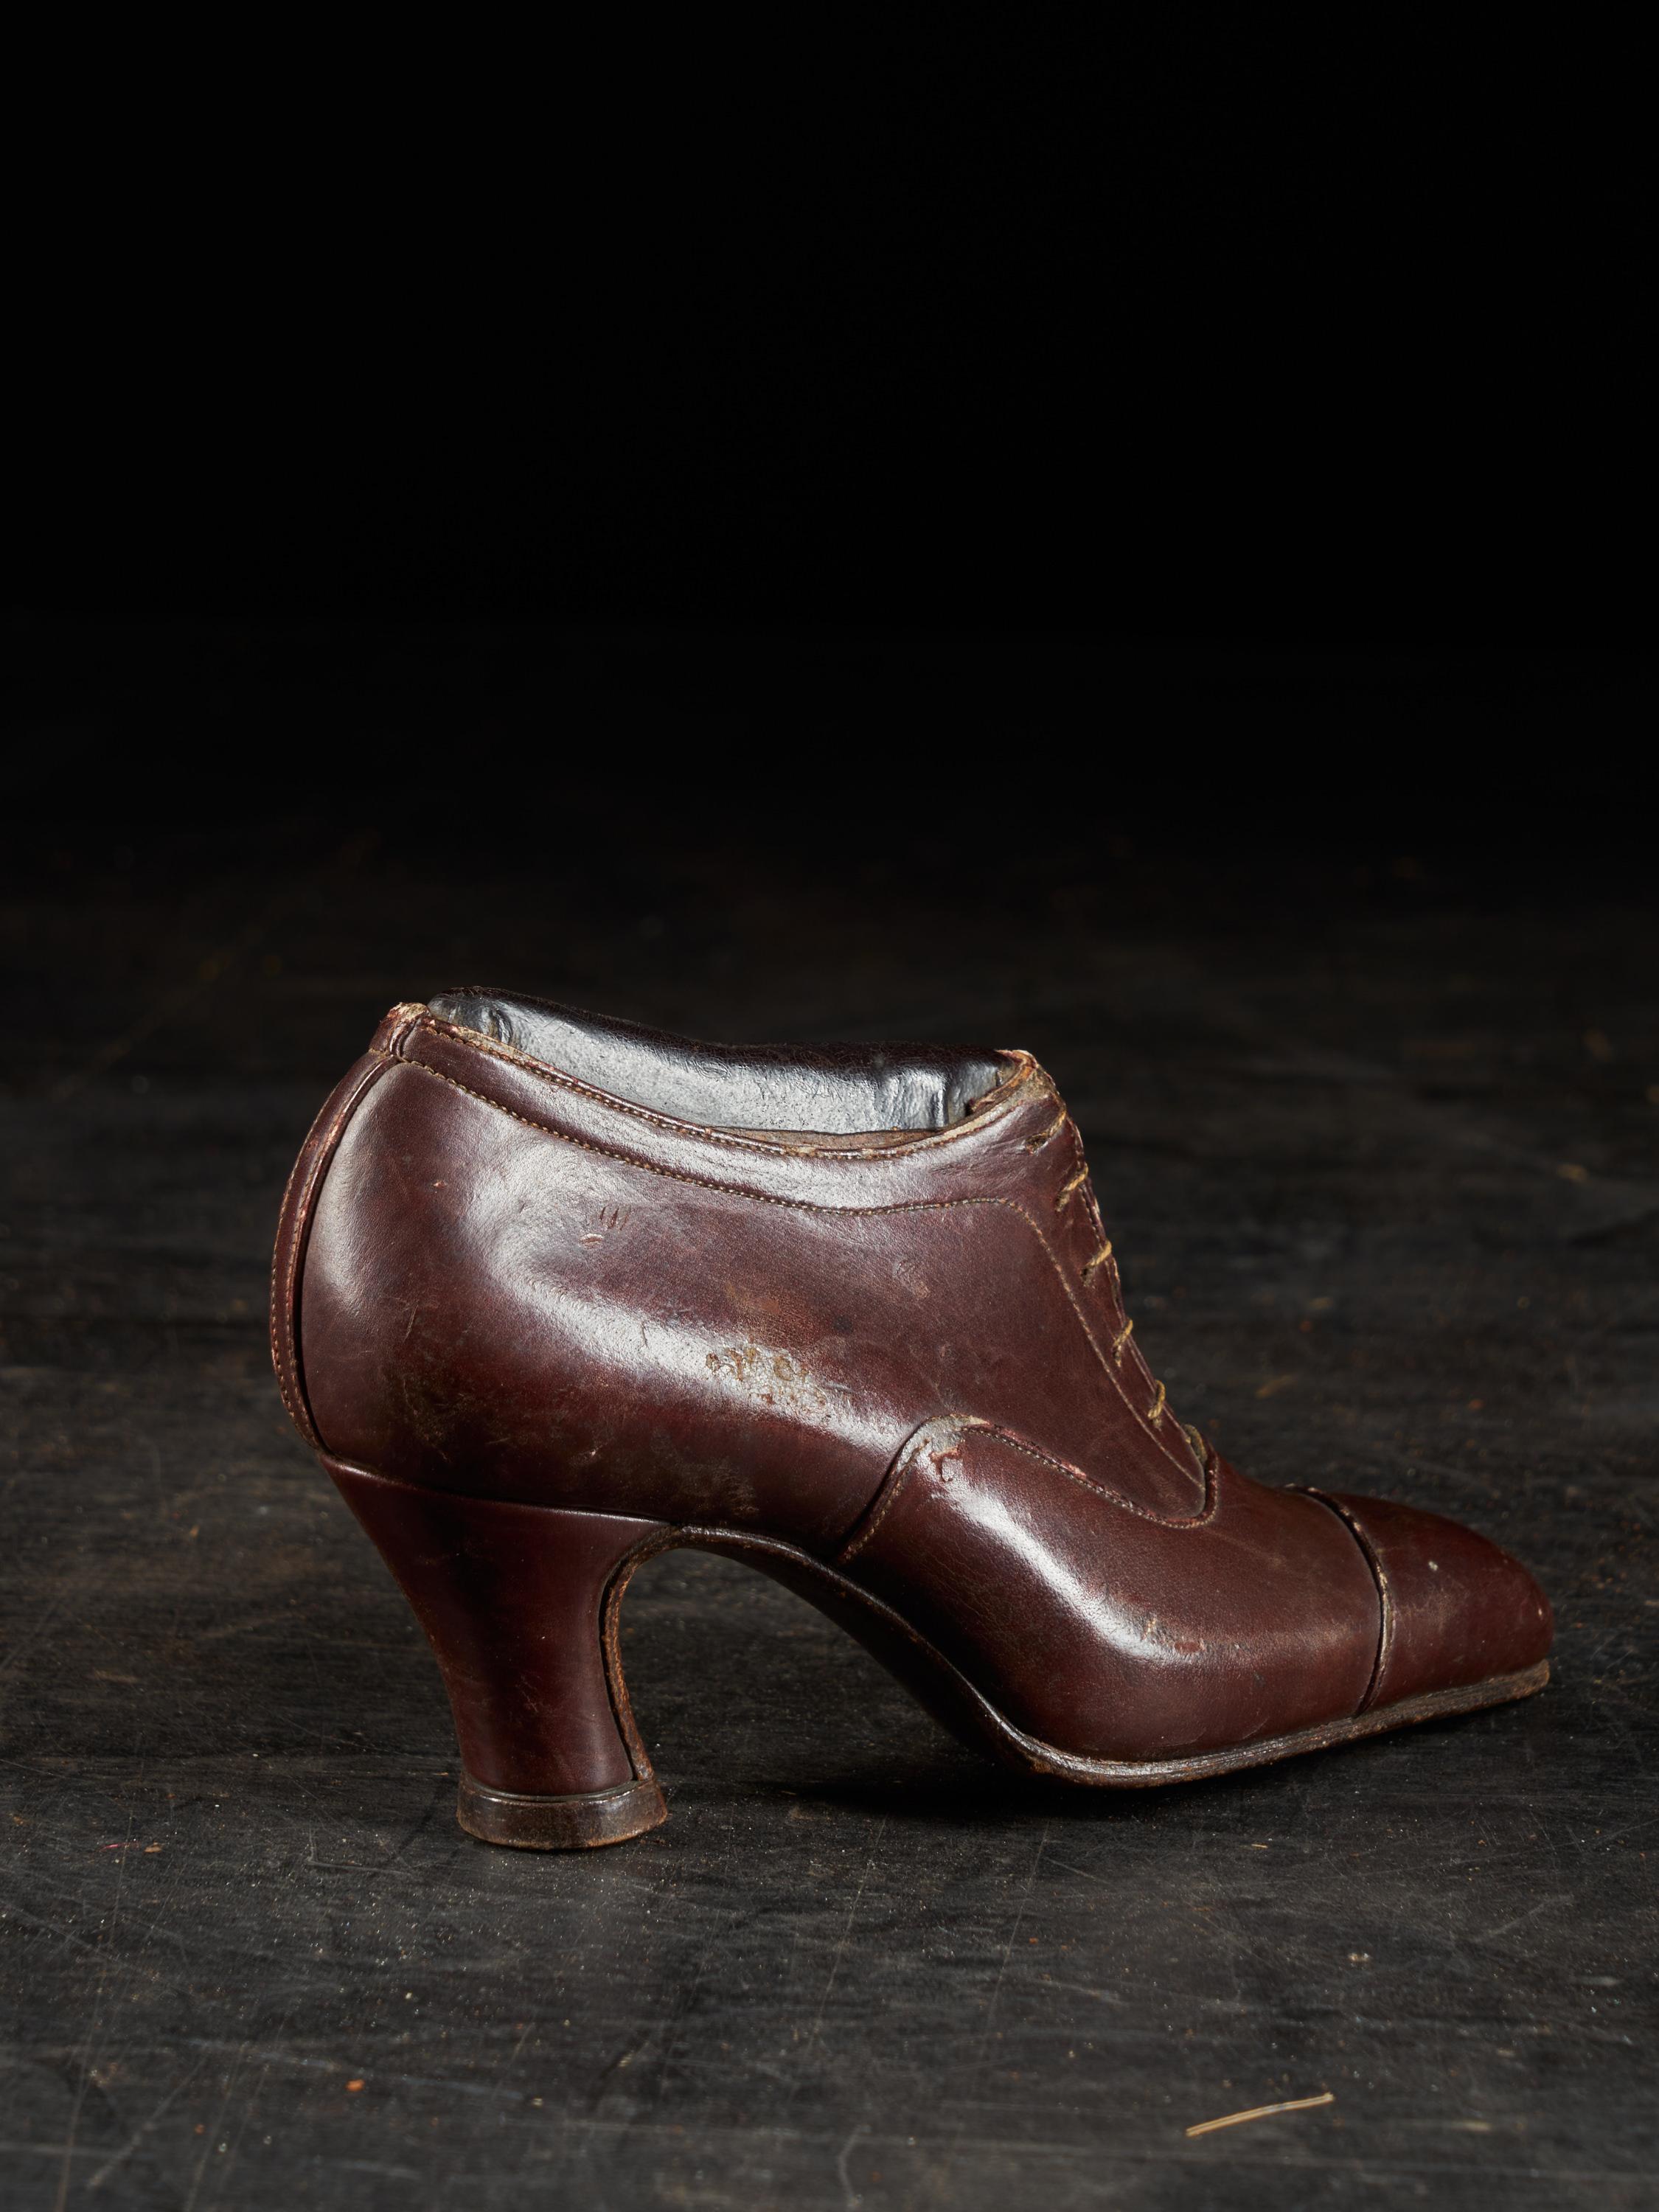 European Set of Three Miniature Shoe Models in Leather